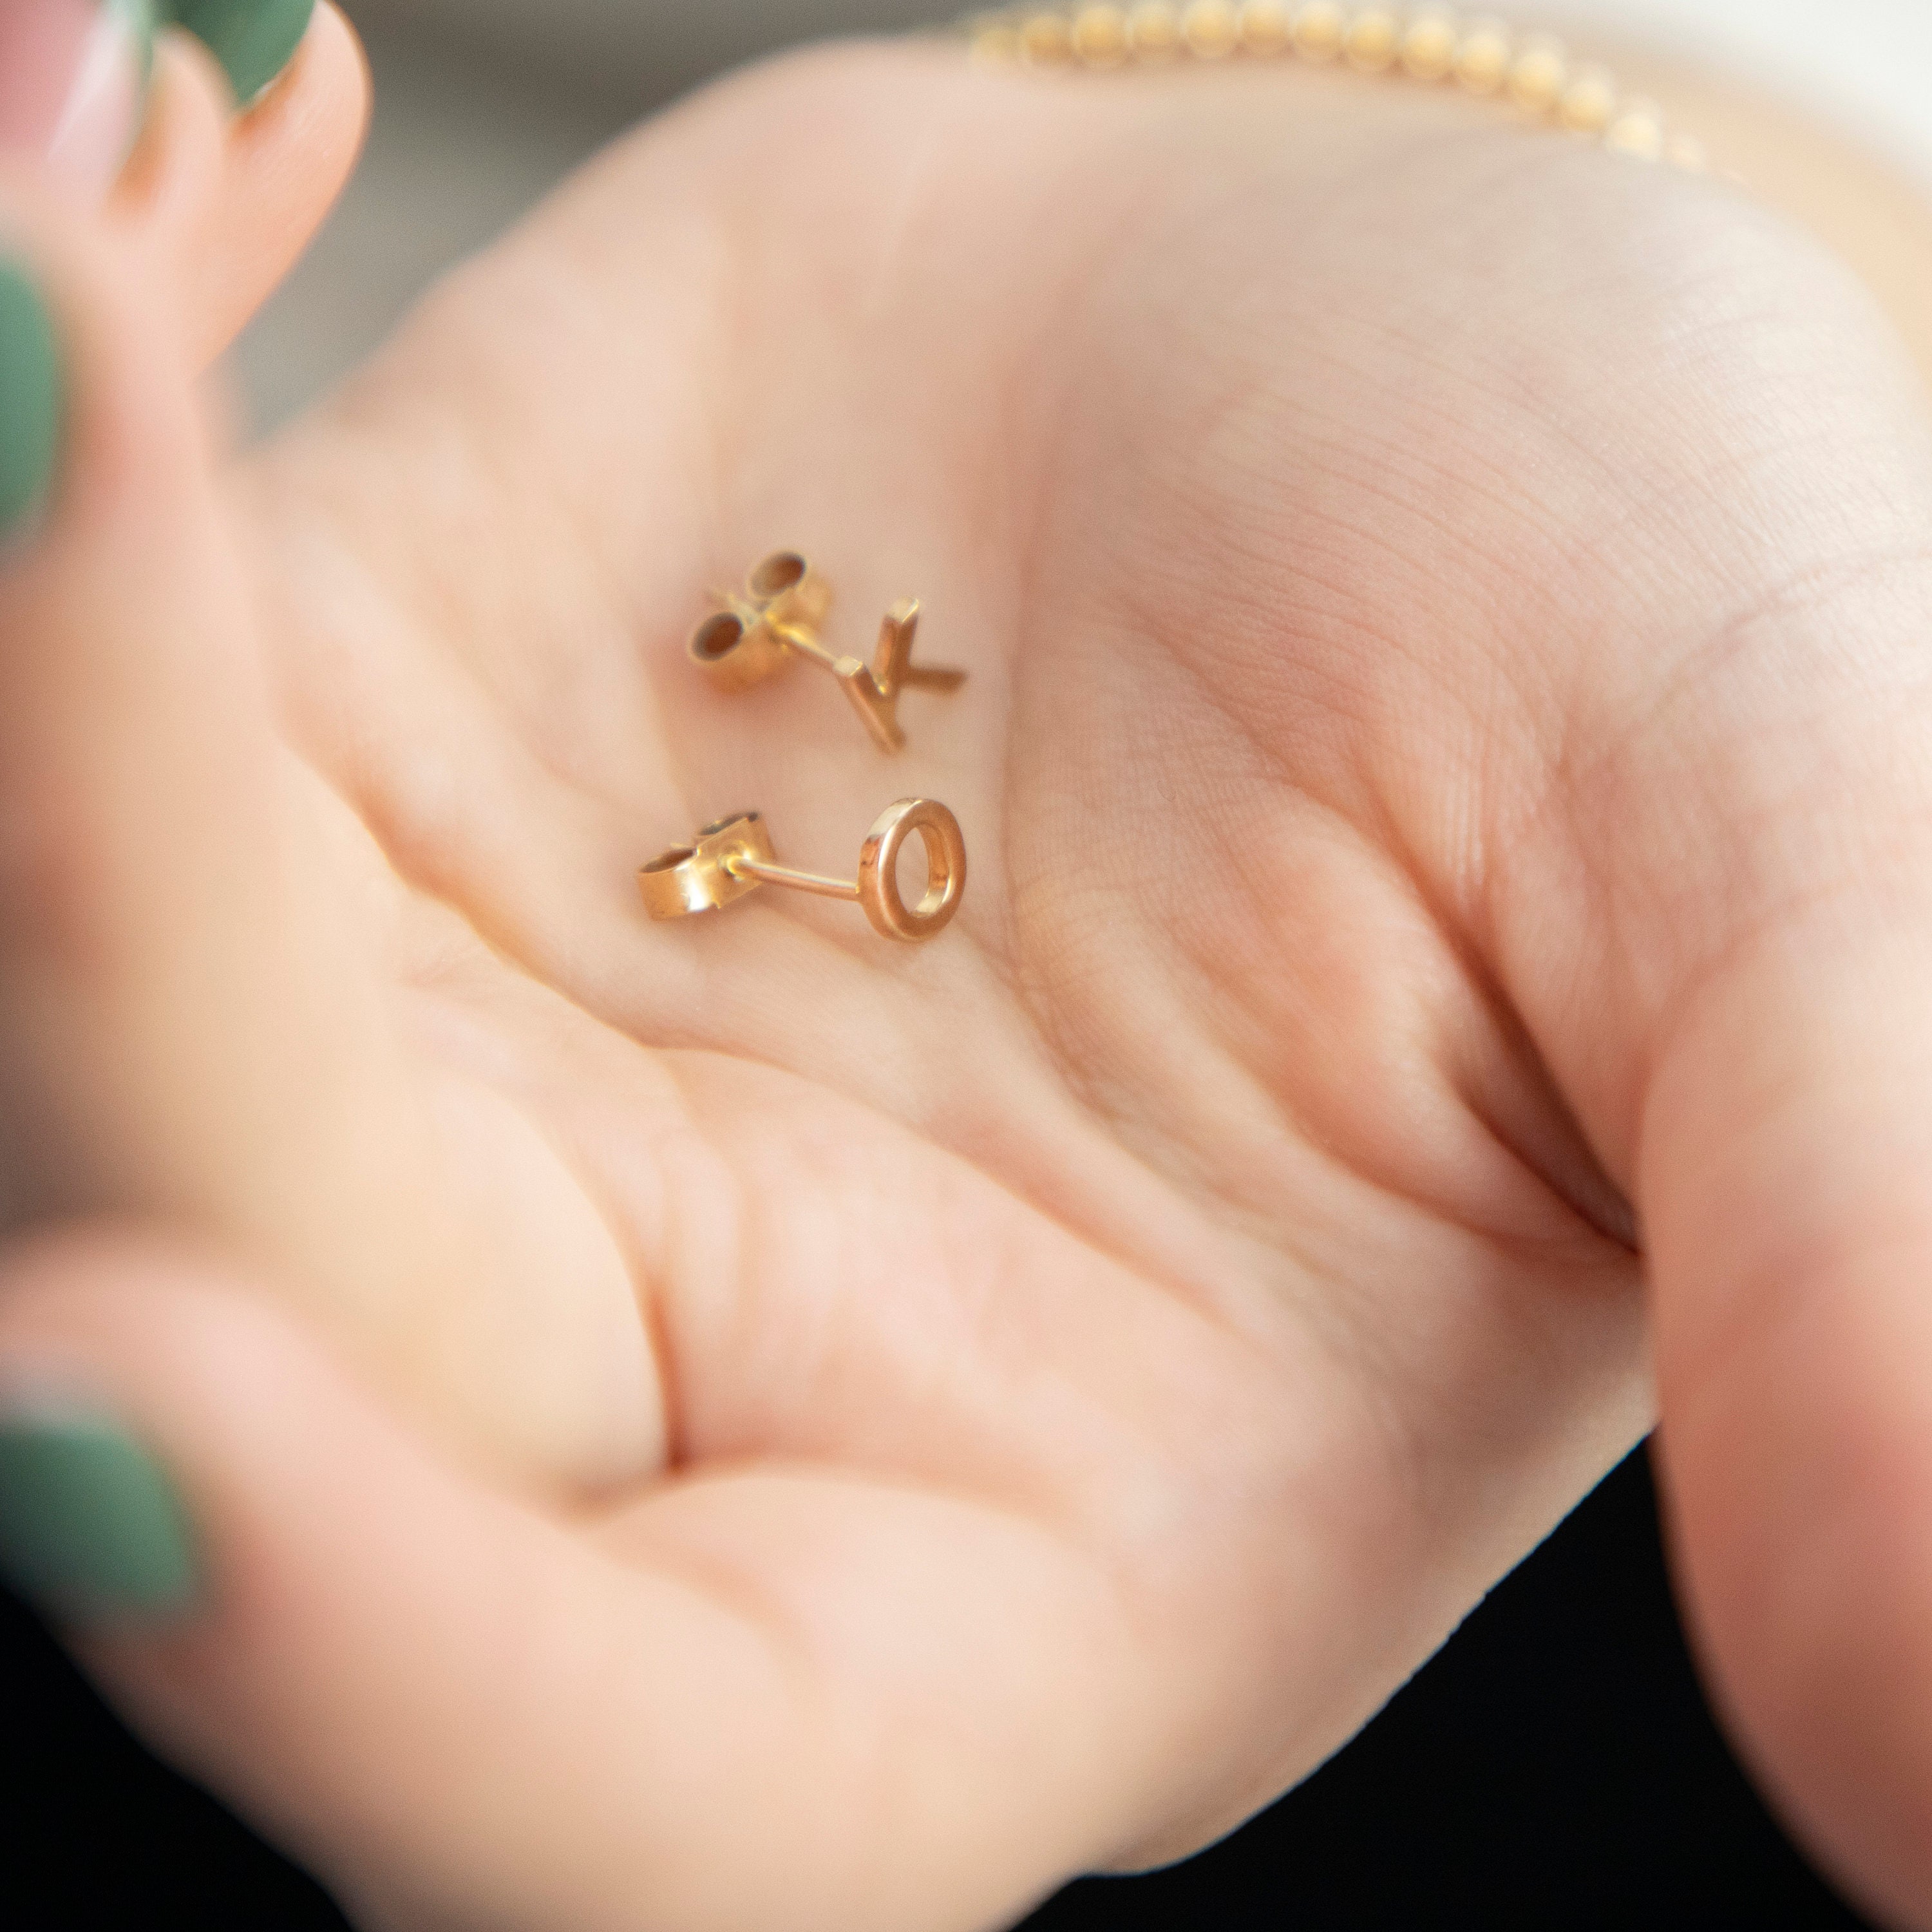 Dainty Tiny Star Stud Earrings, Simple Small Studs, 14k Gold Filled, Tiny  Gold Studs, Small Stud Earring, Tiny Stud Earring, Simple Earrings 